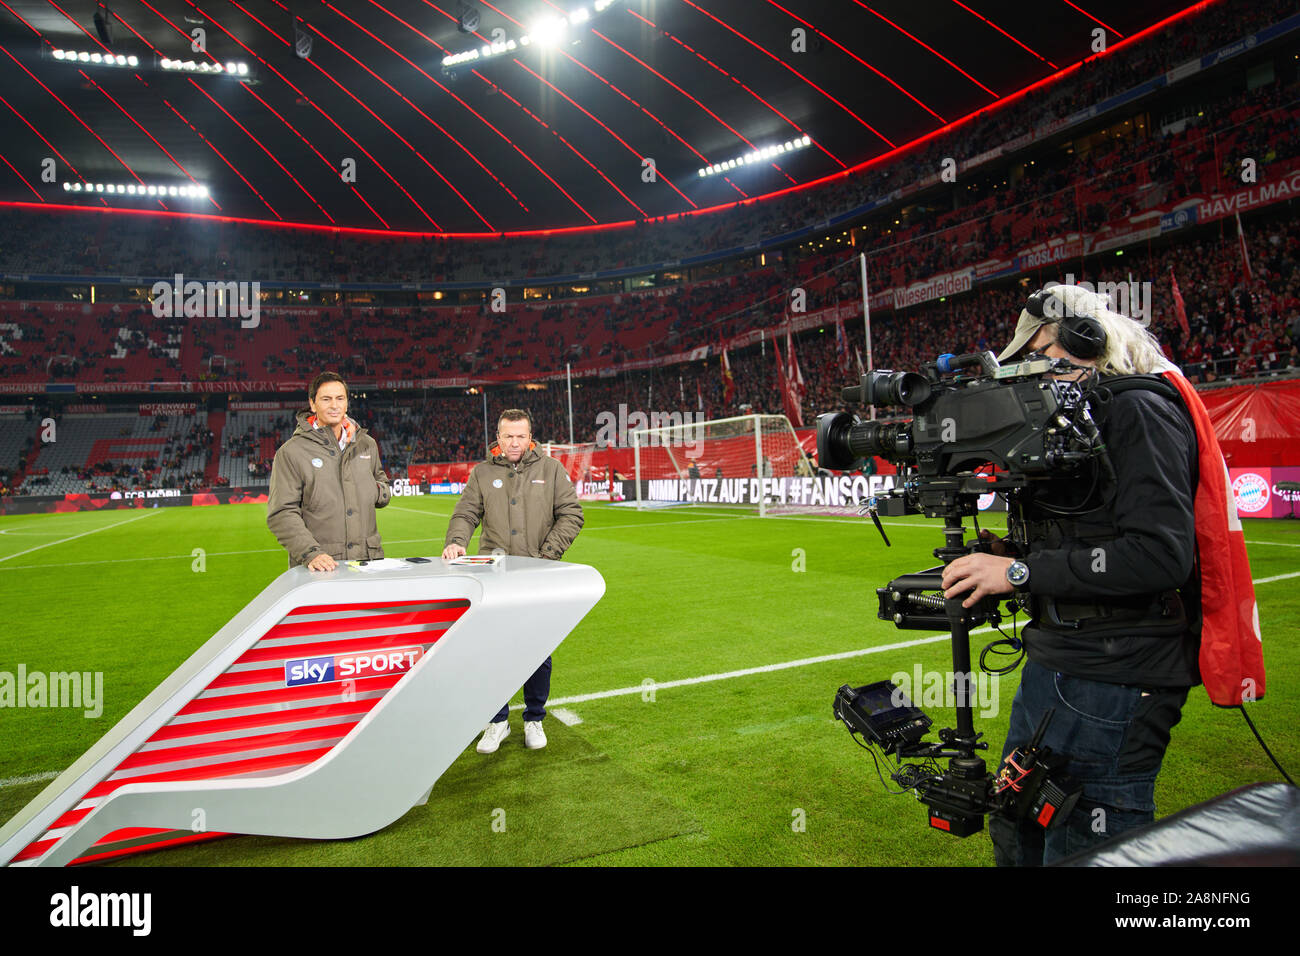 Munich, Germany. 09th Nov, 2019. Football FC Bayern Munich - Dortmund, Munich November 9, 2019. Sebastian HELLMANN, Lothar Matthaeus    FC BAYERN MUNICH - BORUSSIA DORTMUND 4-0  - DFL REGULATIONS PROHIBIT ANY USE OF PHOTOGRAPHS as IMAGE SEQUENCES and/or QUASI-VIDEO -  1. Credit: Peter Schatz/Alamy Live News Stock Photo